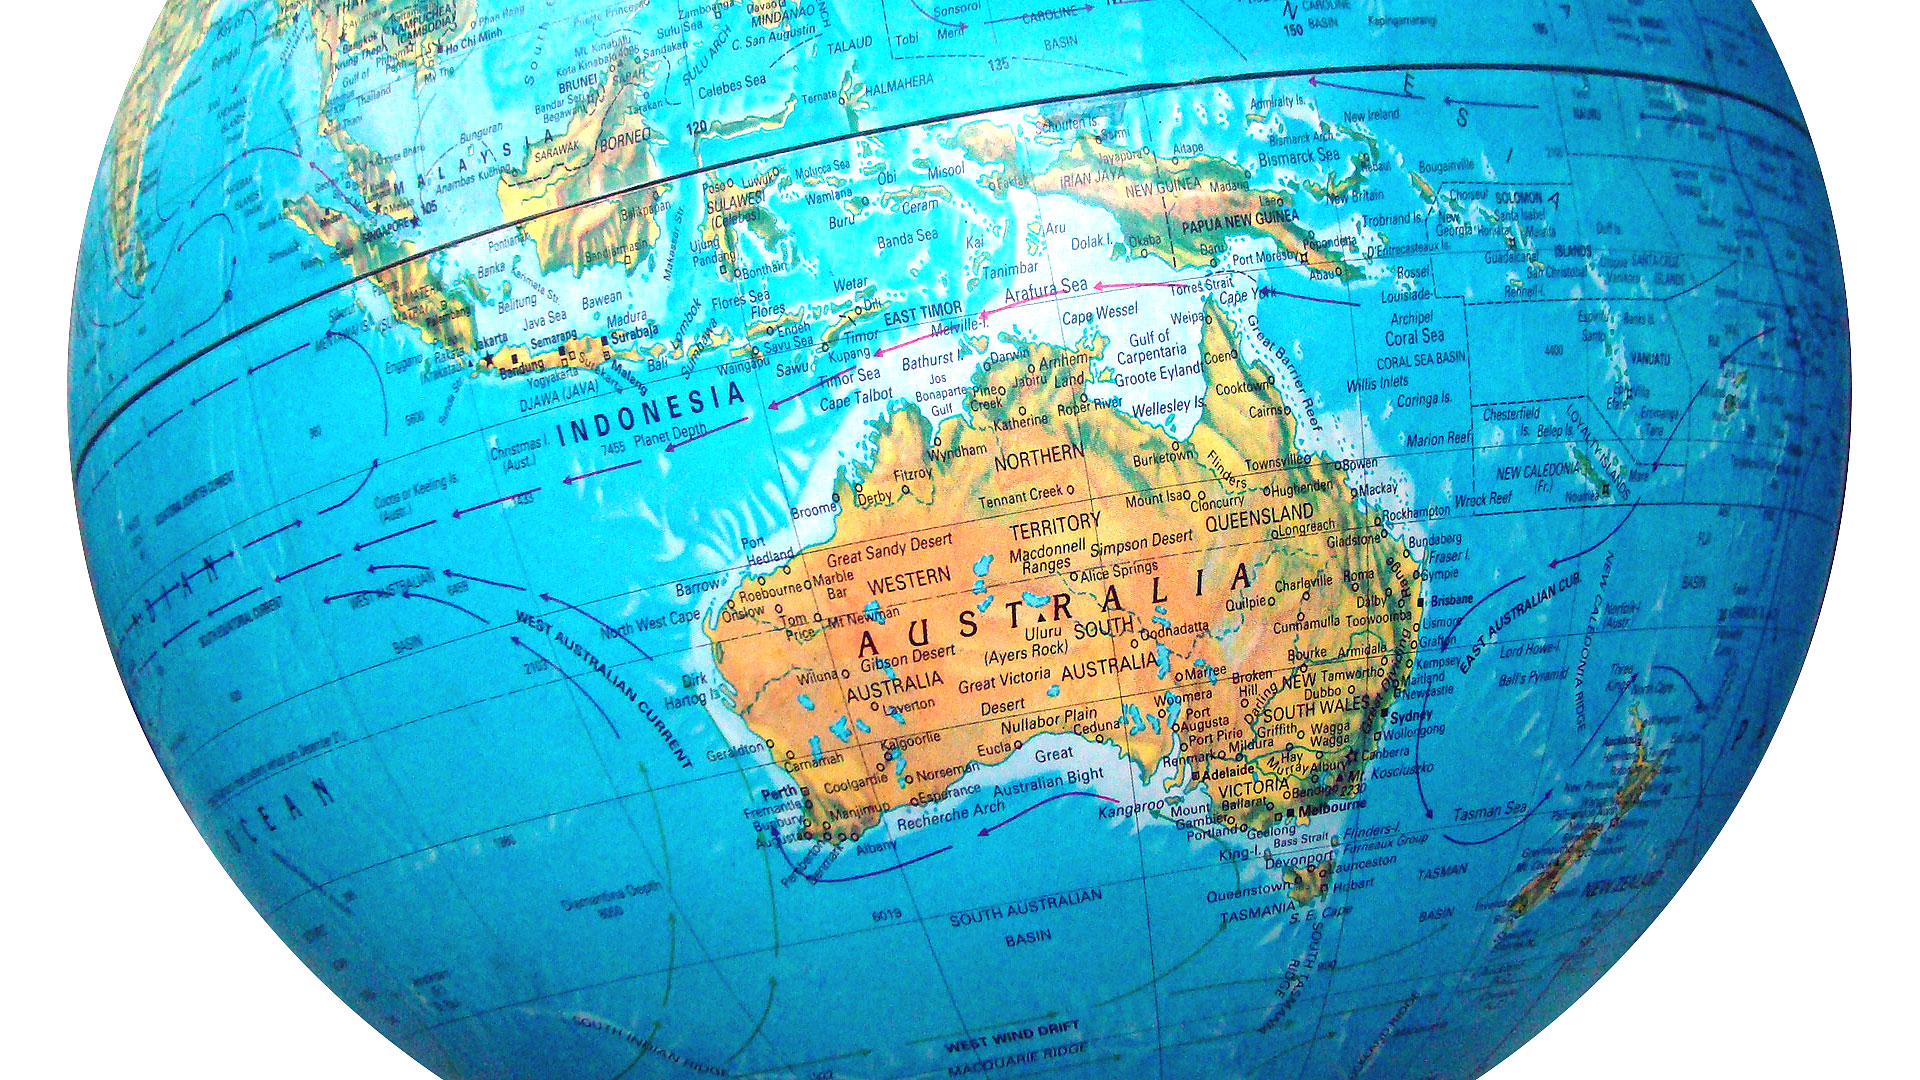 Australia Globe enlarge view